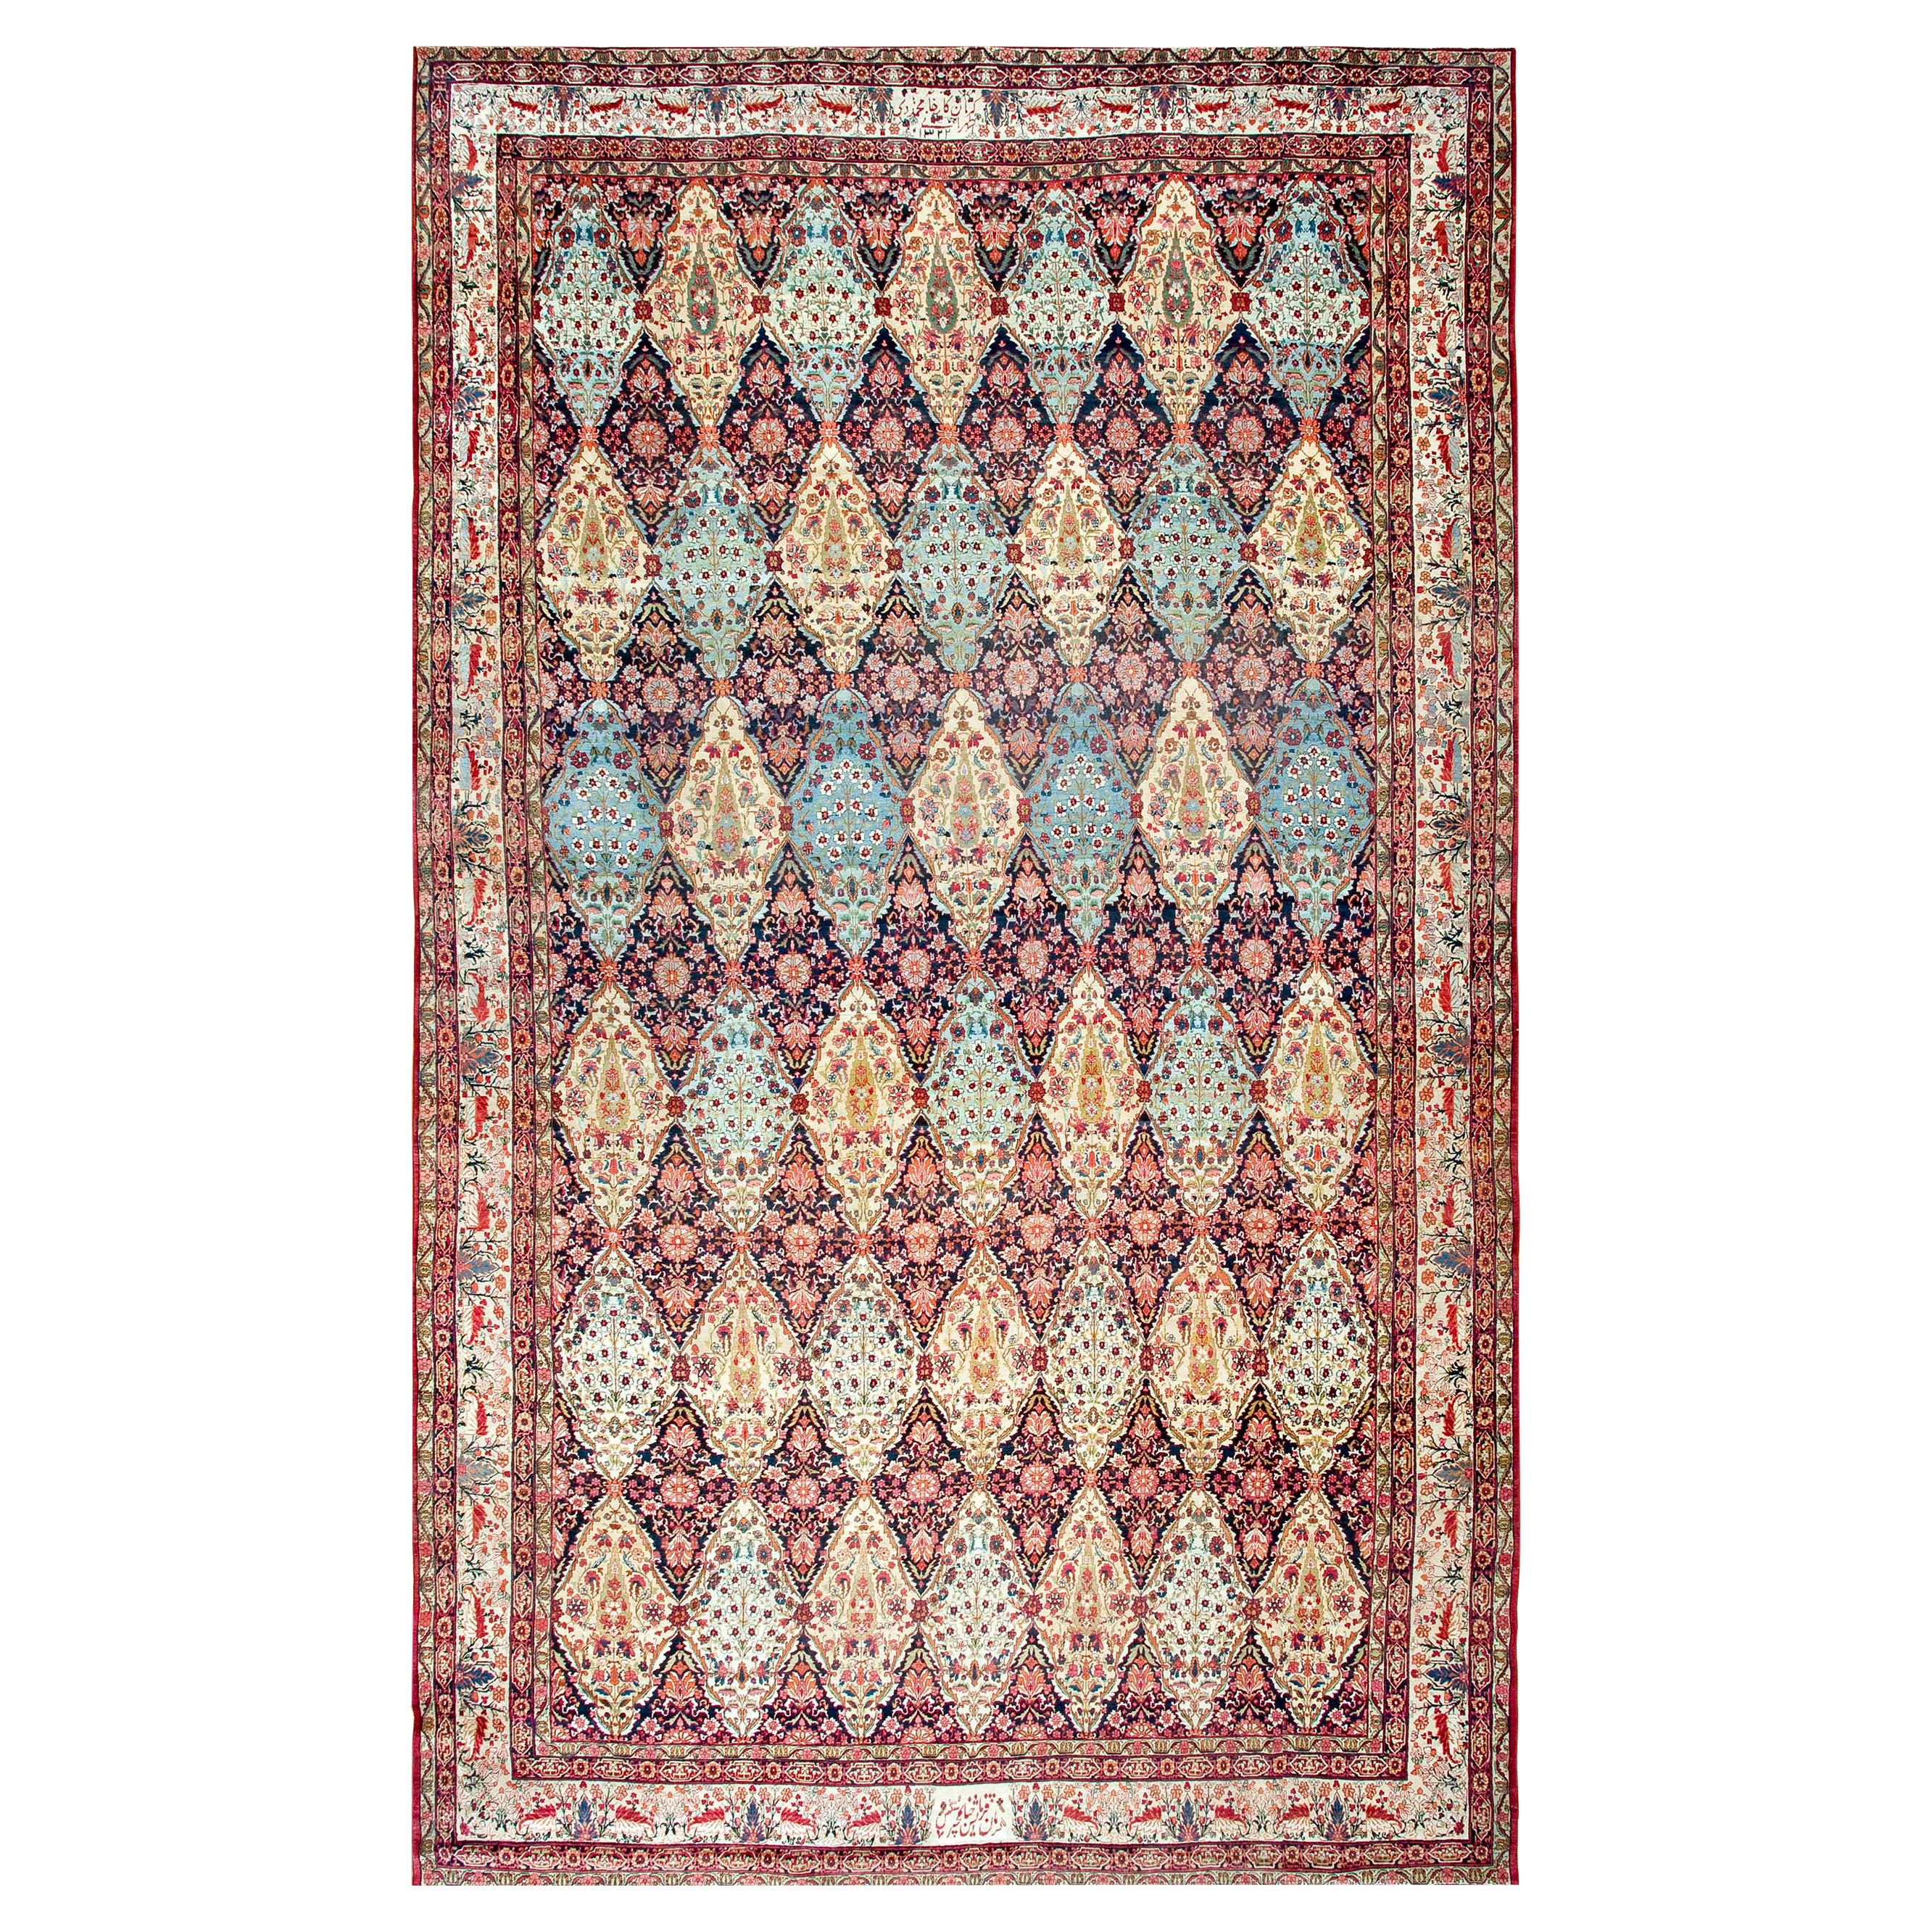 19th Century Persian Kerman Laver Carpet ( 11'6" x 19'8" - 350 x 599 cm )